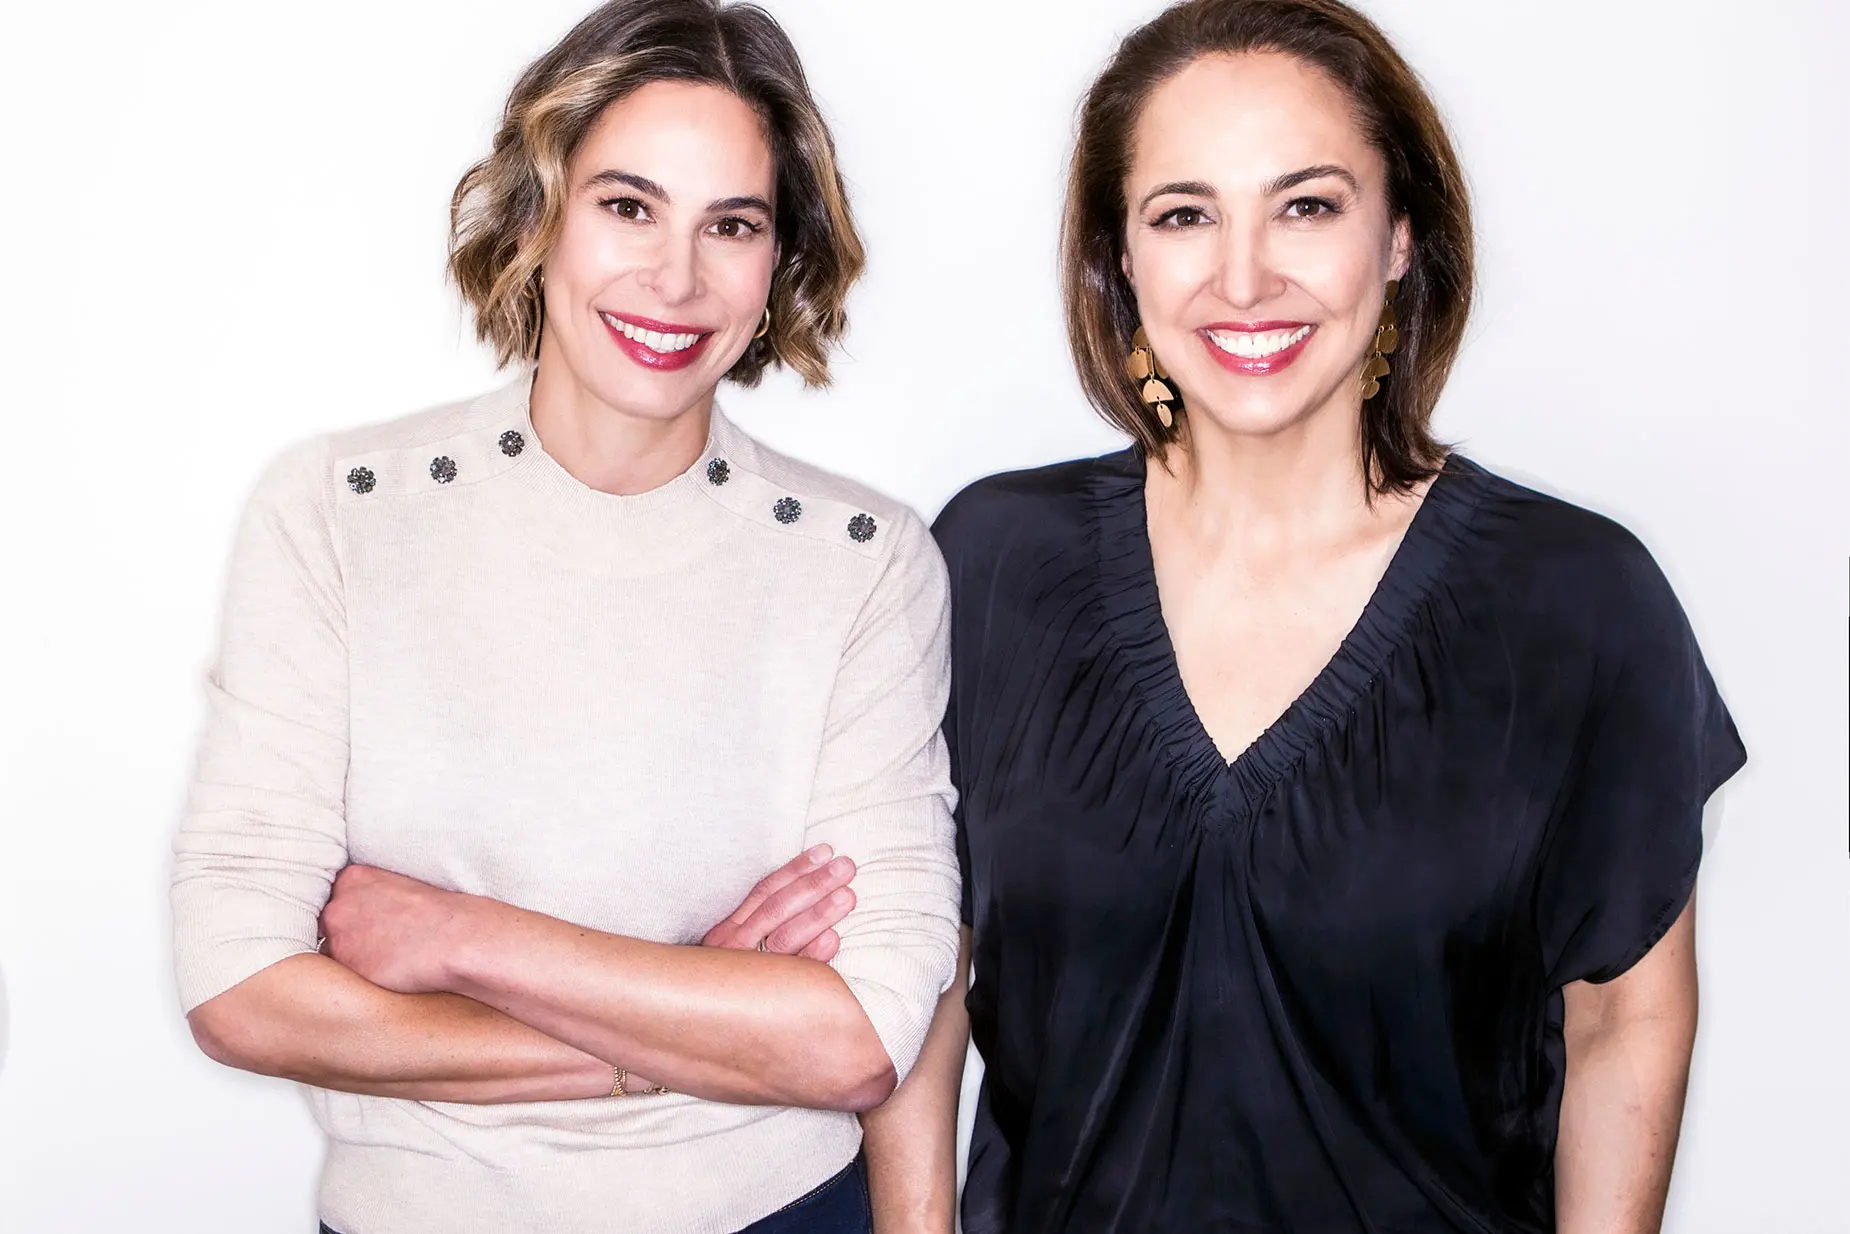 Portrait of Monica Molenaar and Anne Fulenwider standing shoulder to shoulder smiling on white background.